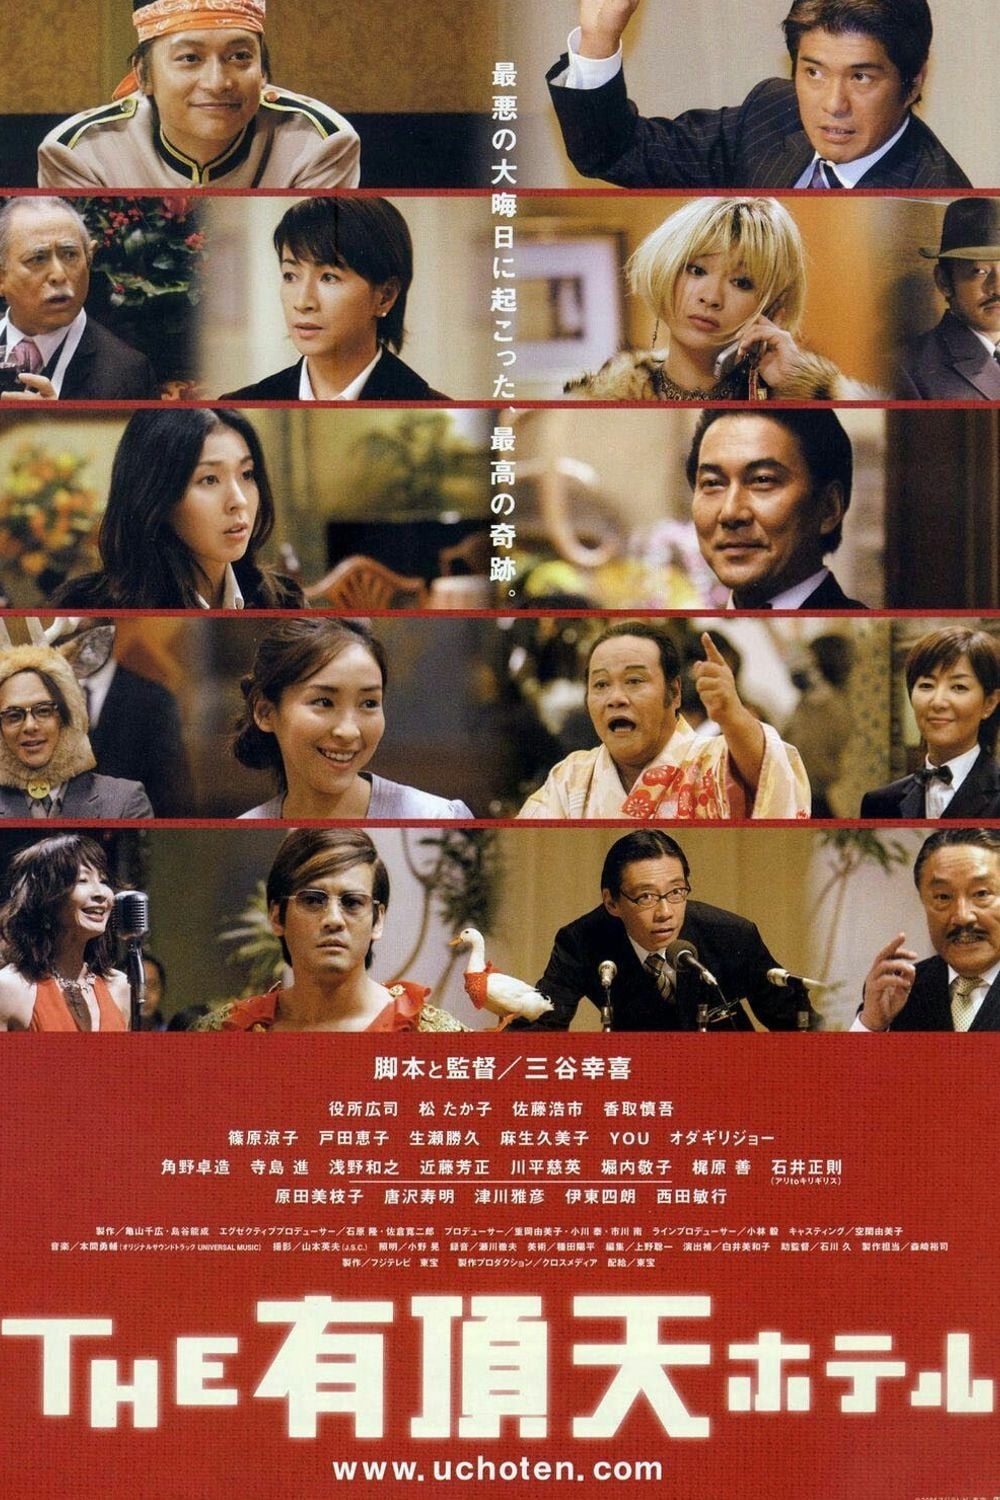 THE 有頂天ホテル film